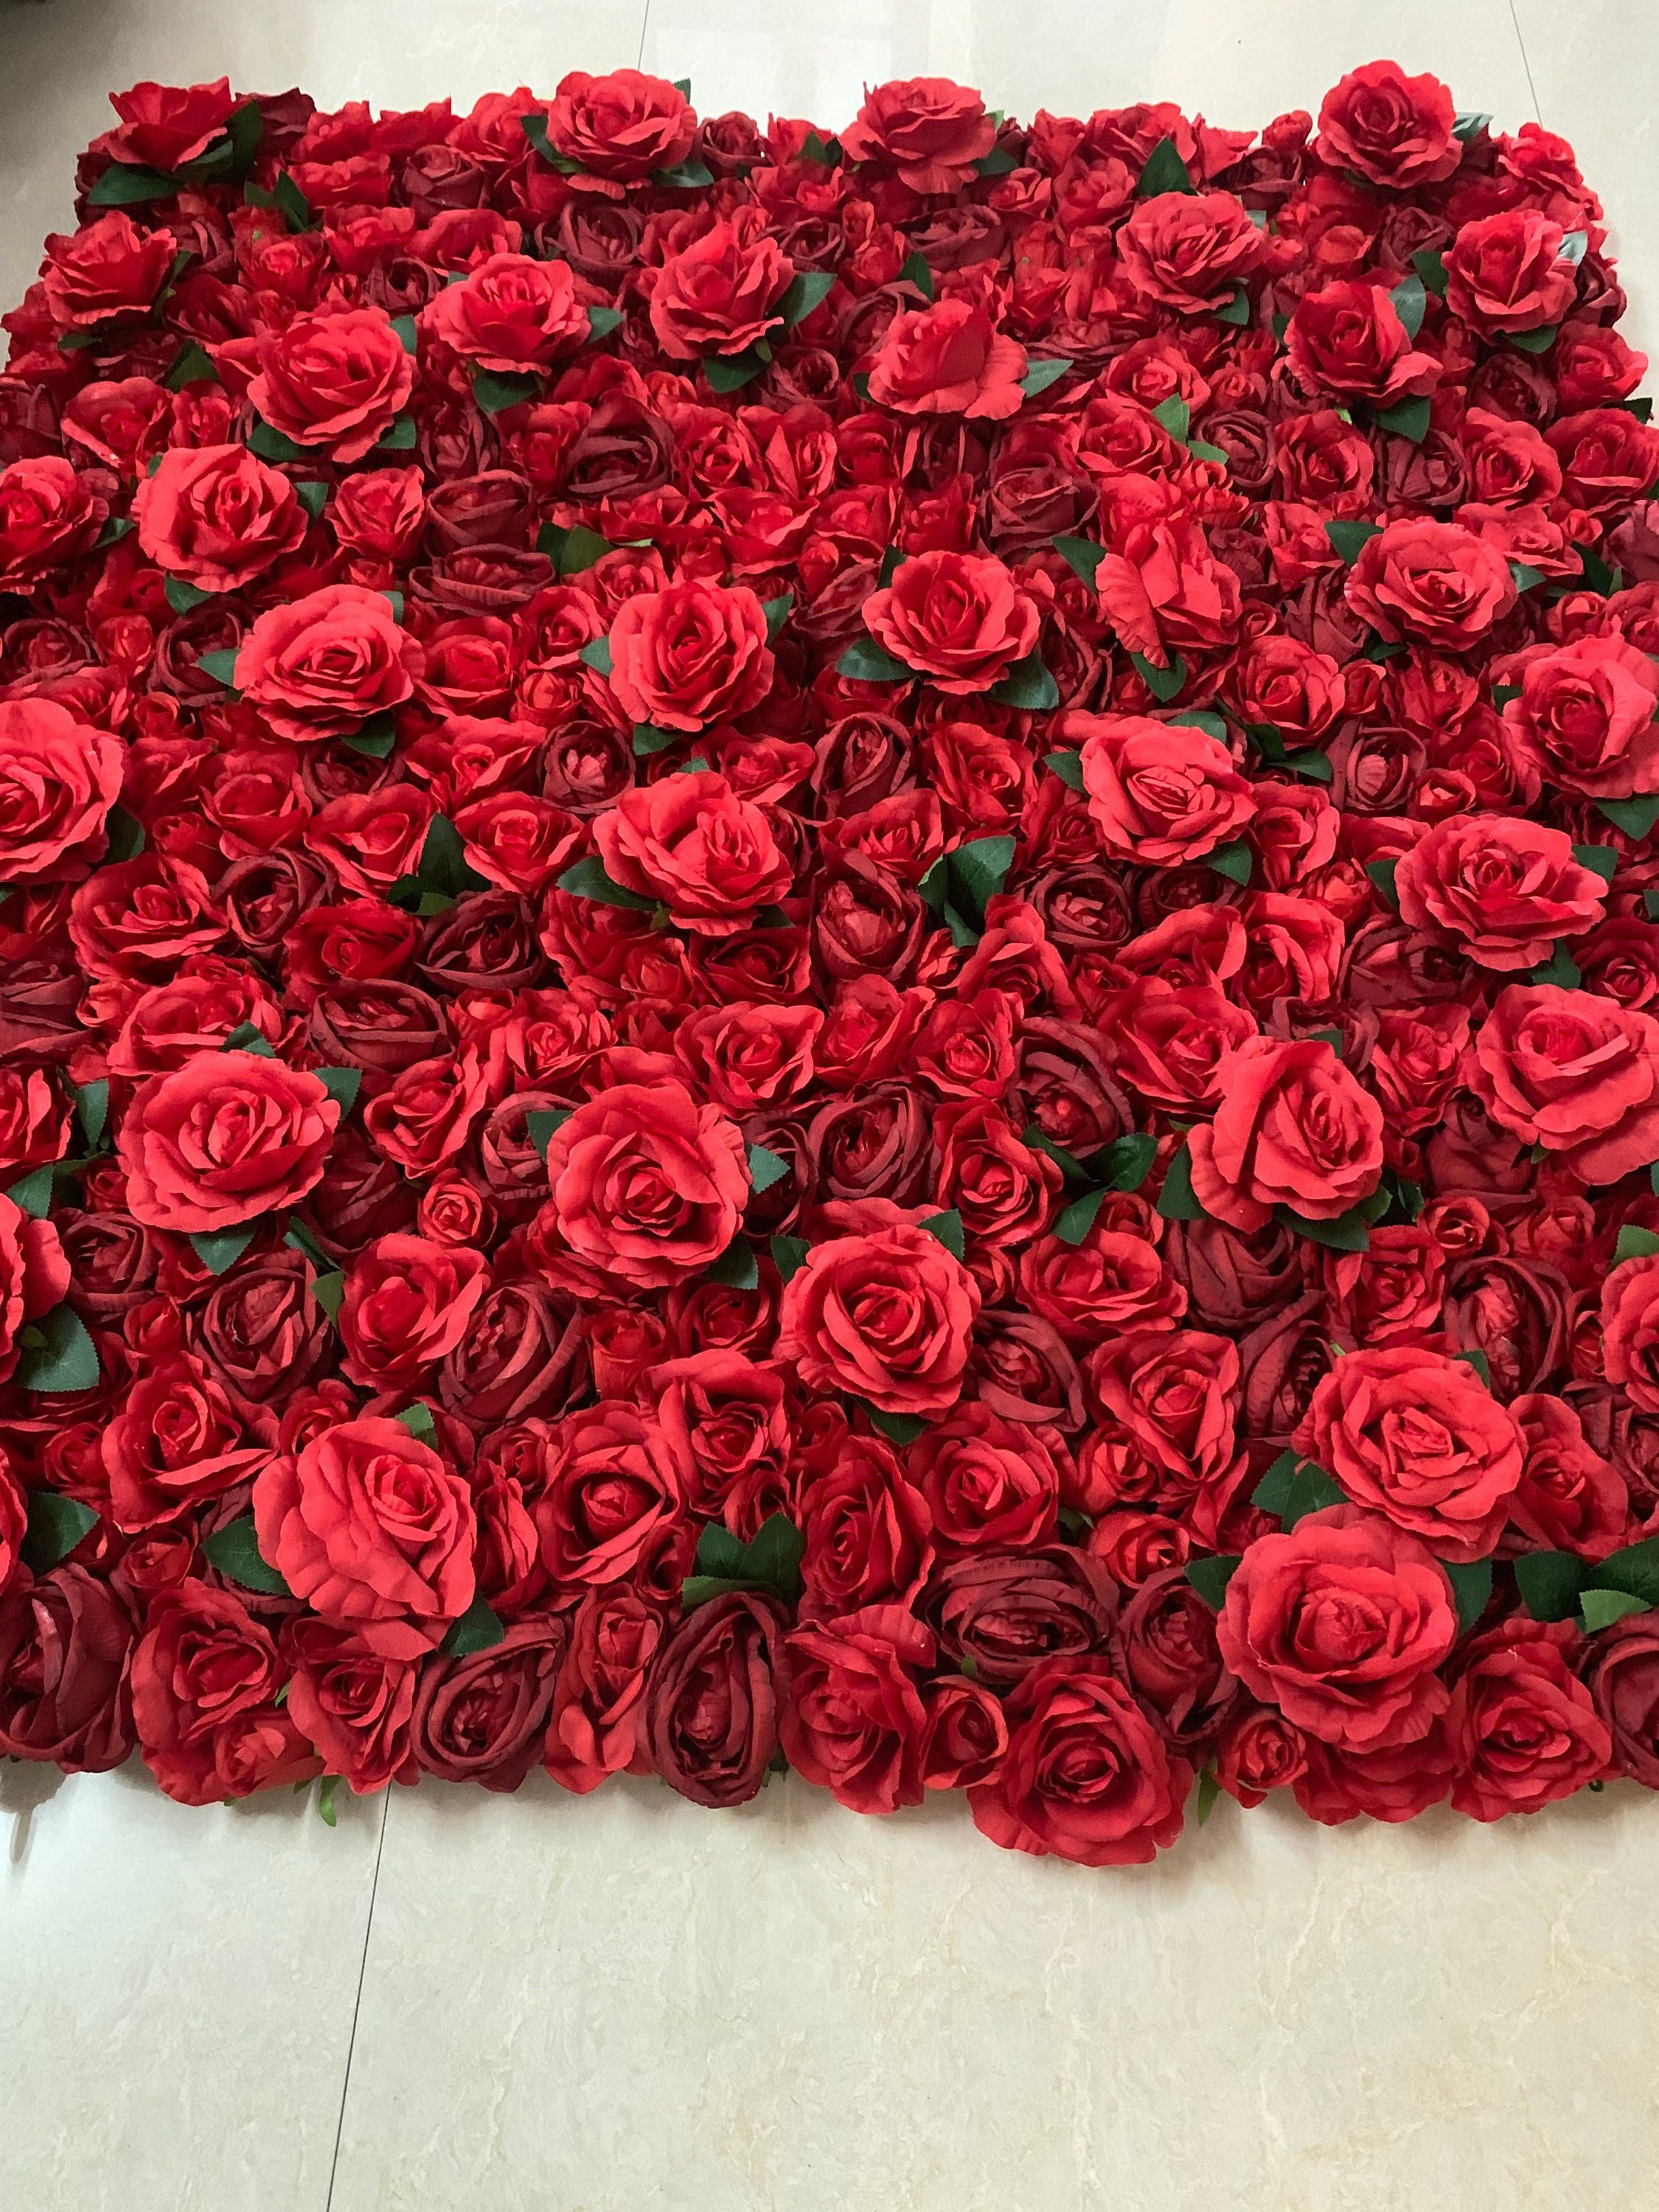 Full Red Rose Wedding Flower For Romantic Photography Backdrop | Etsy